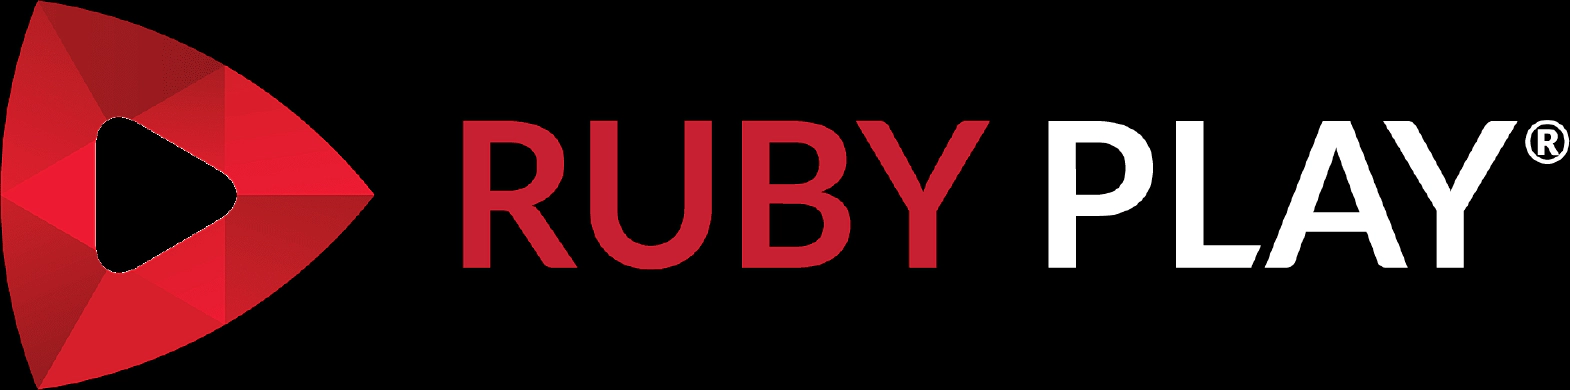 Rubyplay рдкреНрд░рджрд╛рддрд╛